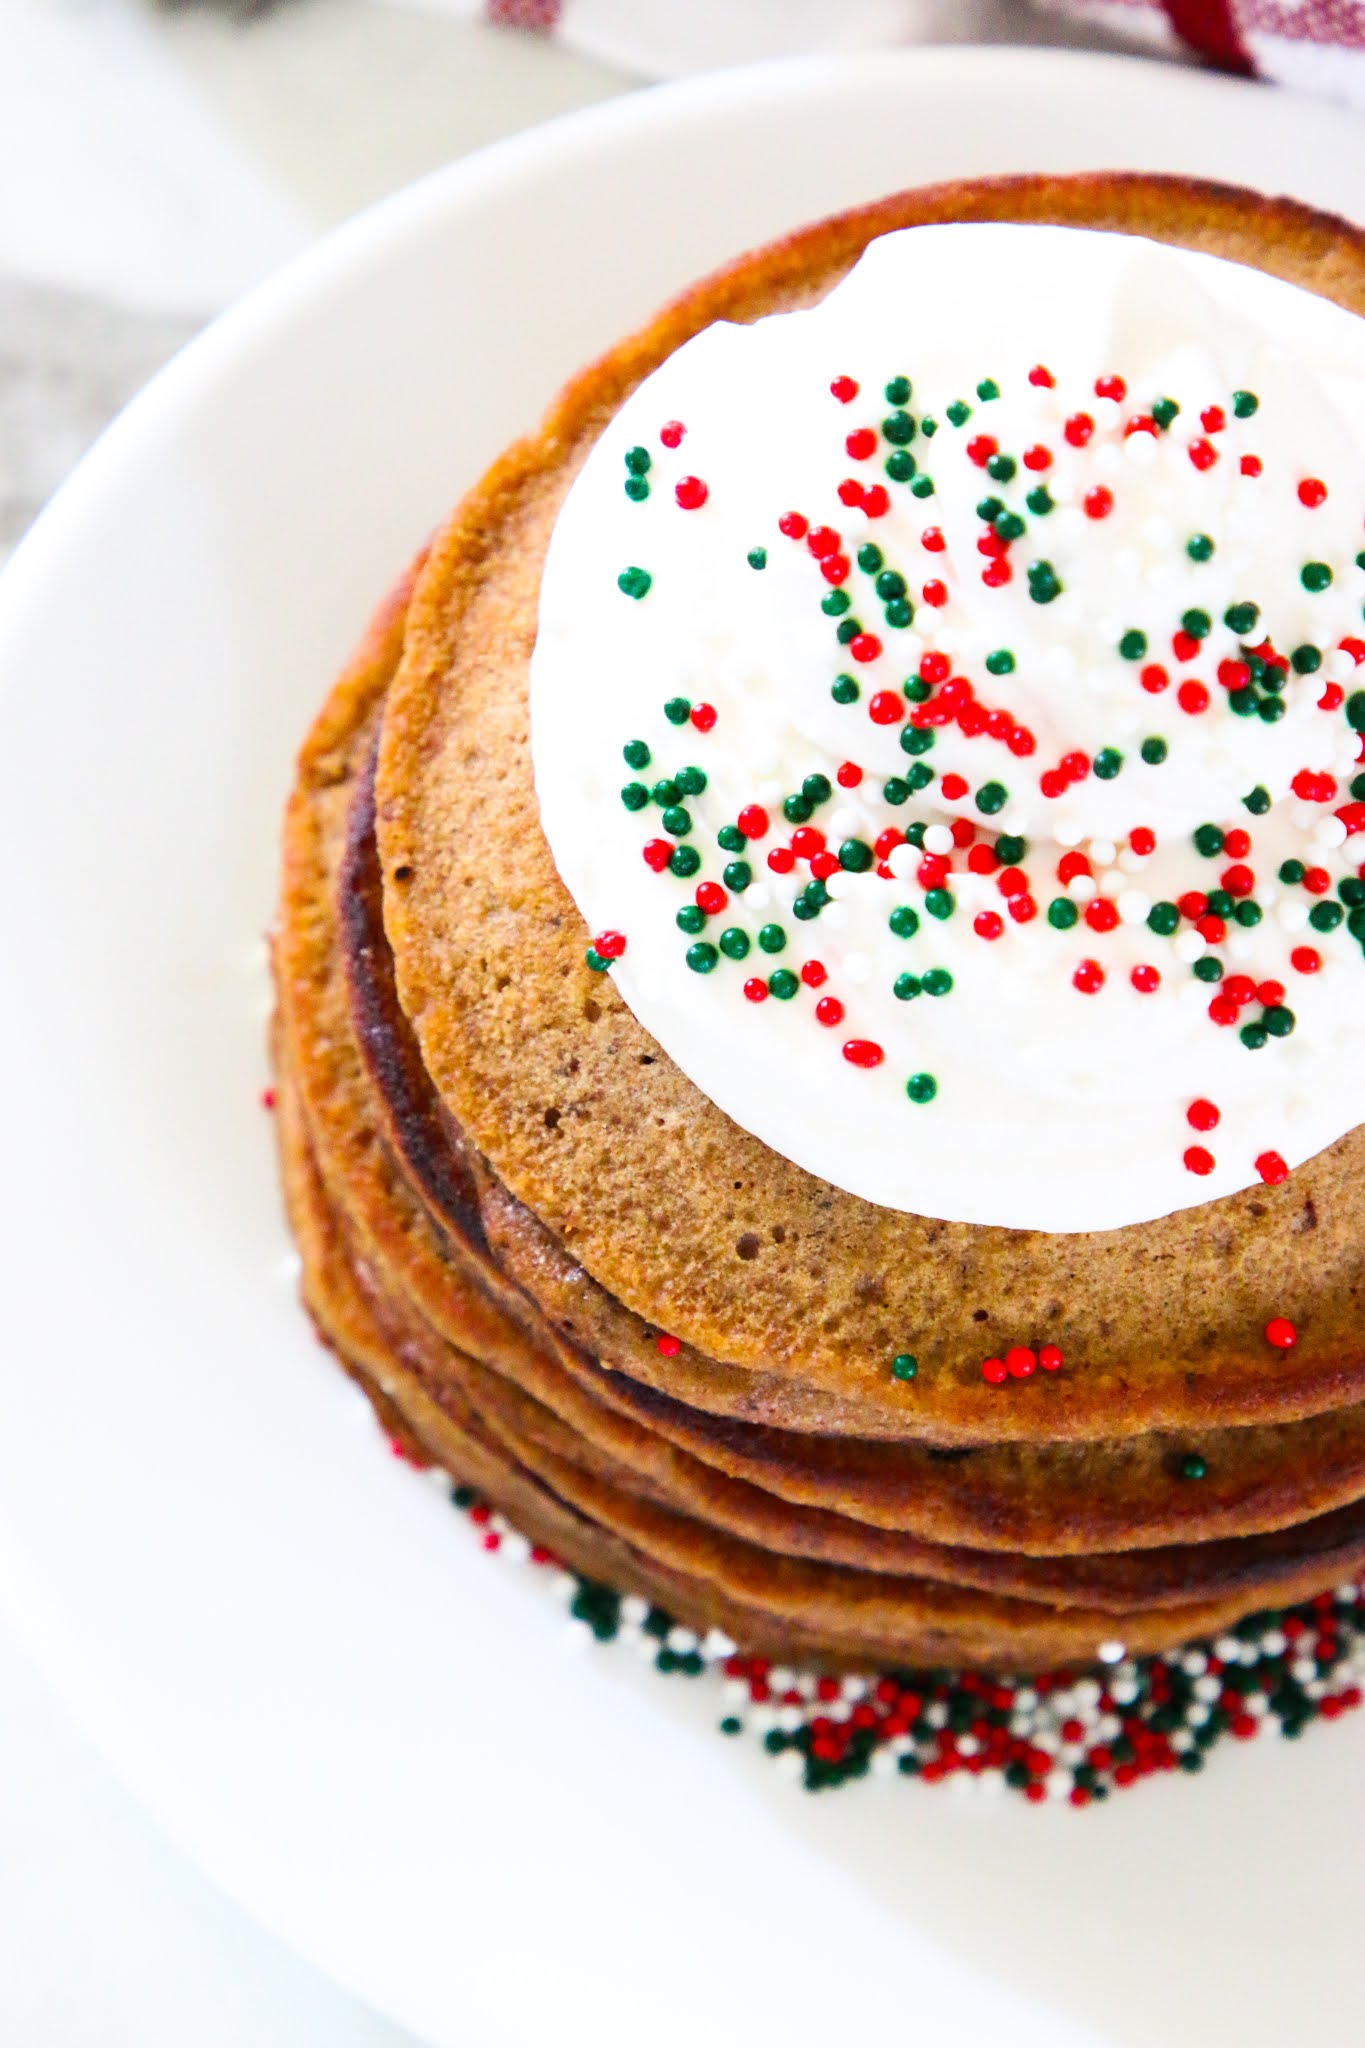 Gingerbread pancakes. Gingerbread pancakes recipe. Gingerbread pancakes from cake mix. Gingerbread pancakes without molasses. Pancake recipe. Gingerbread pancakes healthy. Gingerbread man pancakes. Gingerbread pancakes vegan. Gingerbread pancakes with lemon sauce. Fresh ginger pancakes. #holiday #christmas #breakfast #pancakes #gingerbread